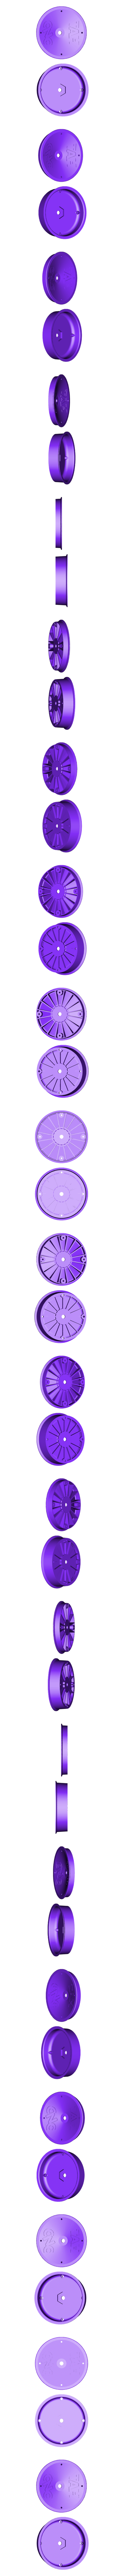 Frontwheel2WD.stl Download free STL file Glueless 1/10 RC car wheels • 3D printing template, tahustvedt